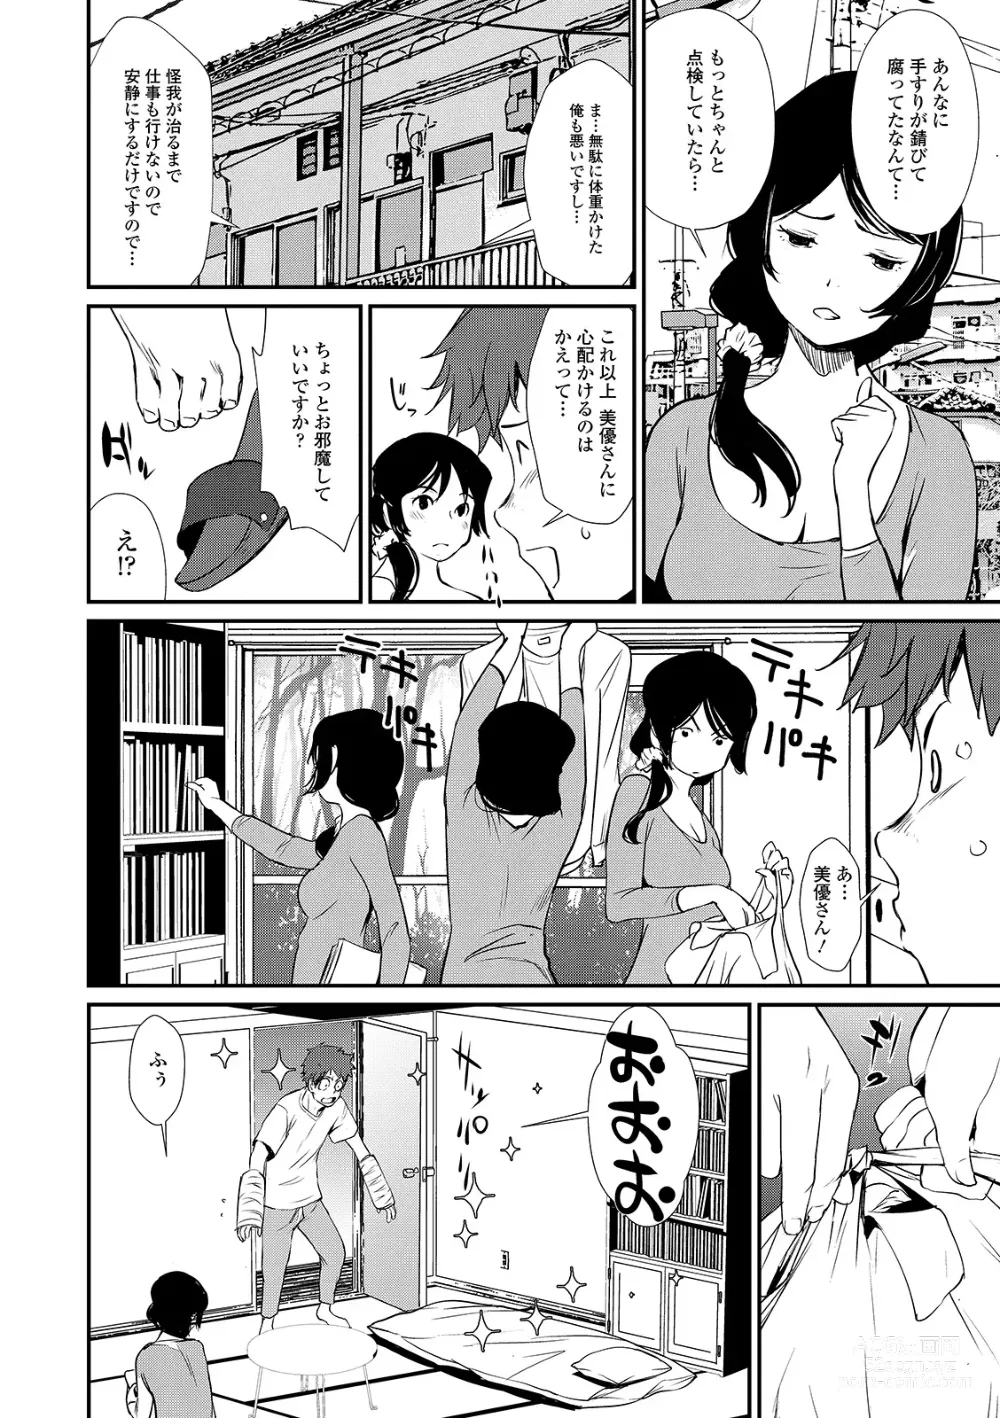 Page 170 of manga Hadaka Asobi